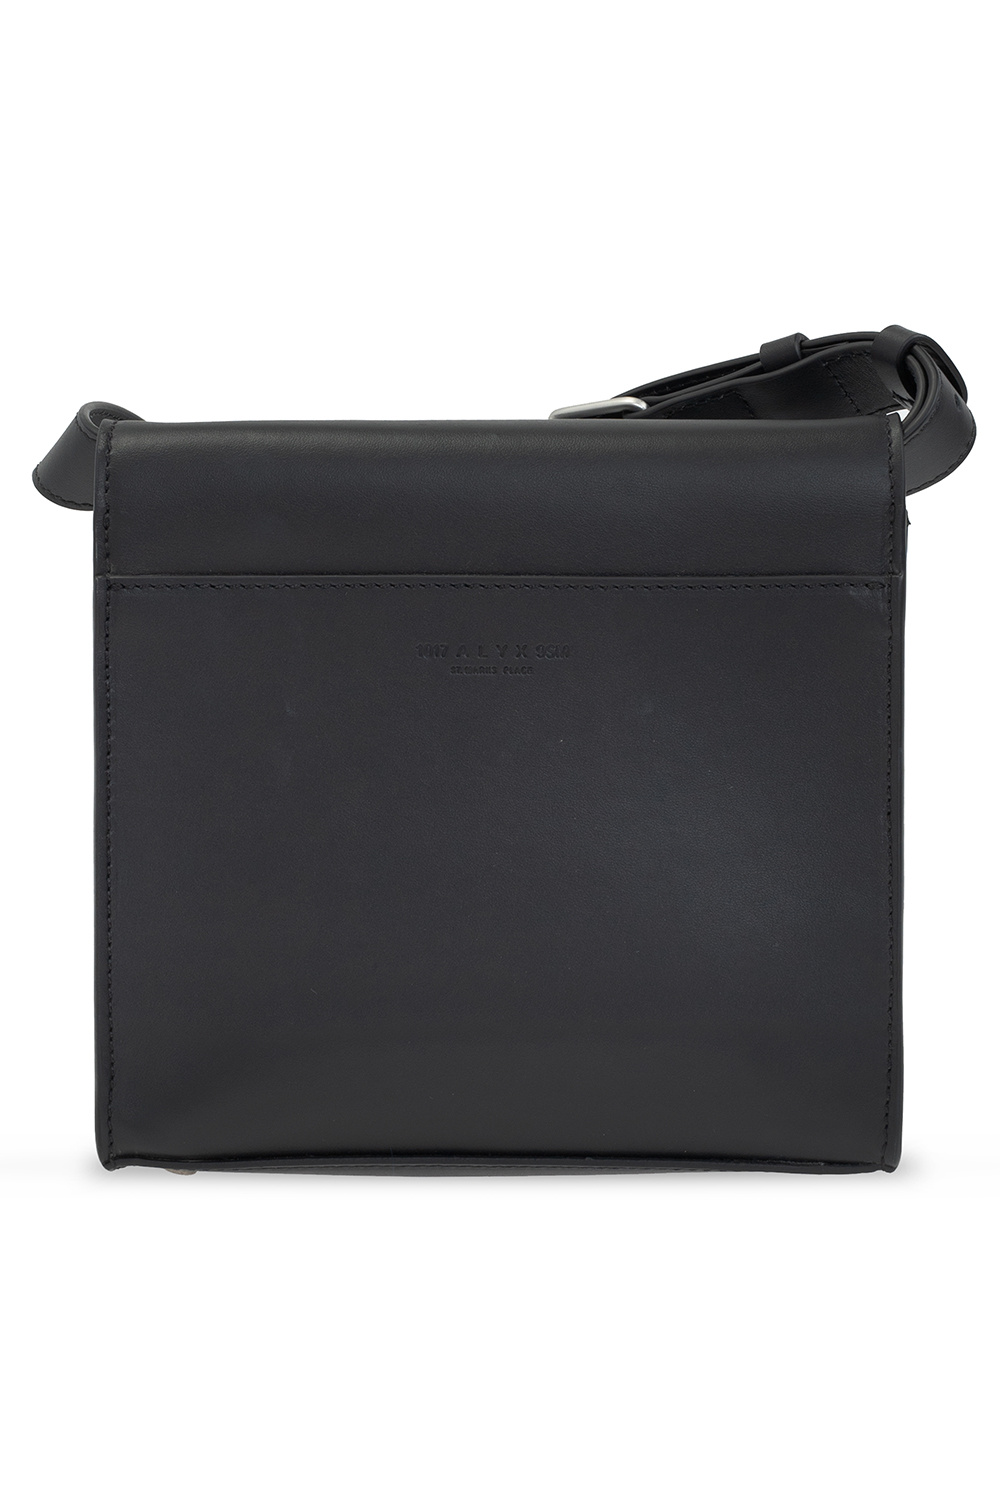 Black ‘Ludo’ shoulder bag 1017 ALYX 9SM - Vitkac GB